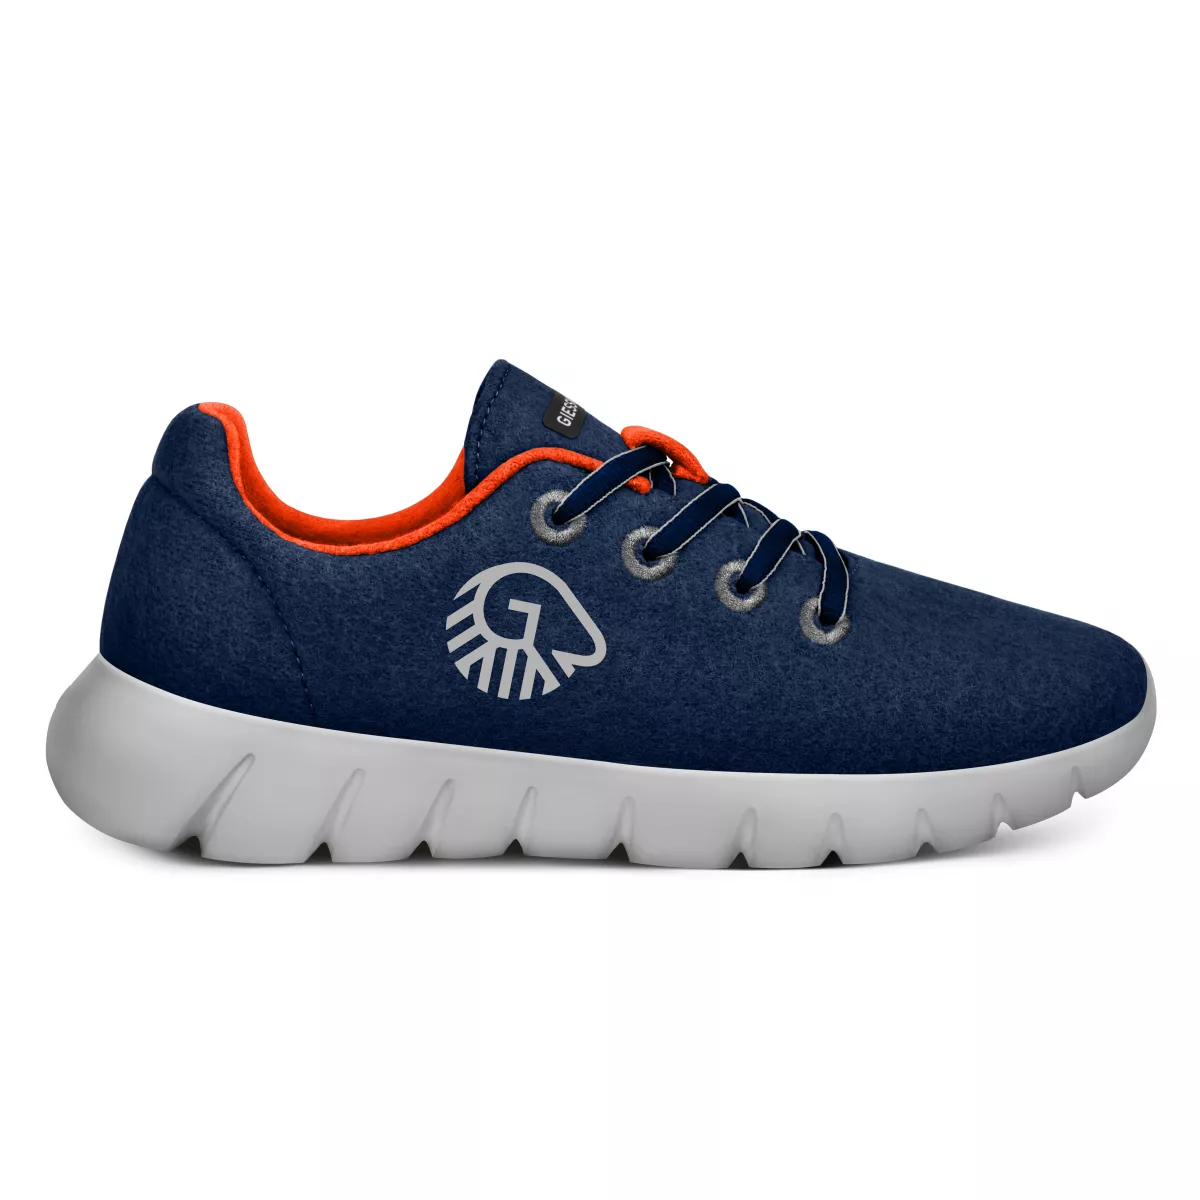 Pantofi barbati Merino Runners bleumarin 640 41